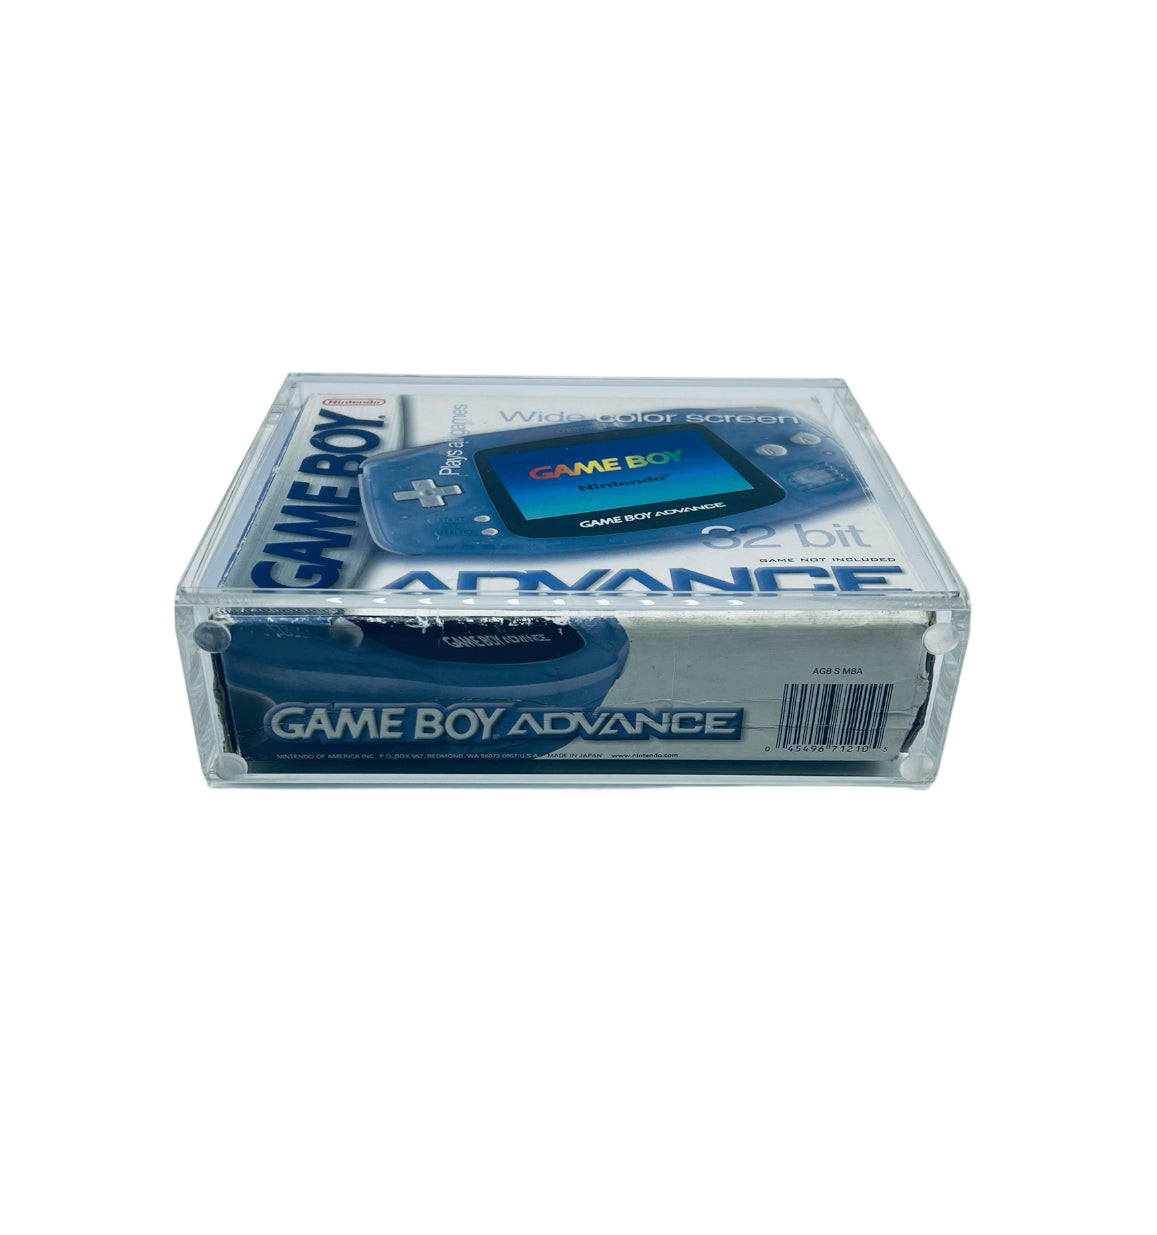 Nintendo Game Boy Advance Console Box Size UV Protected Nintendo